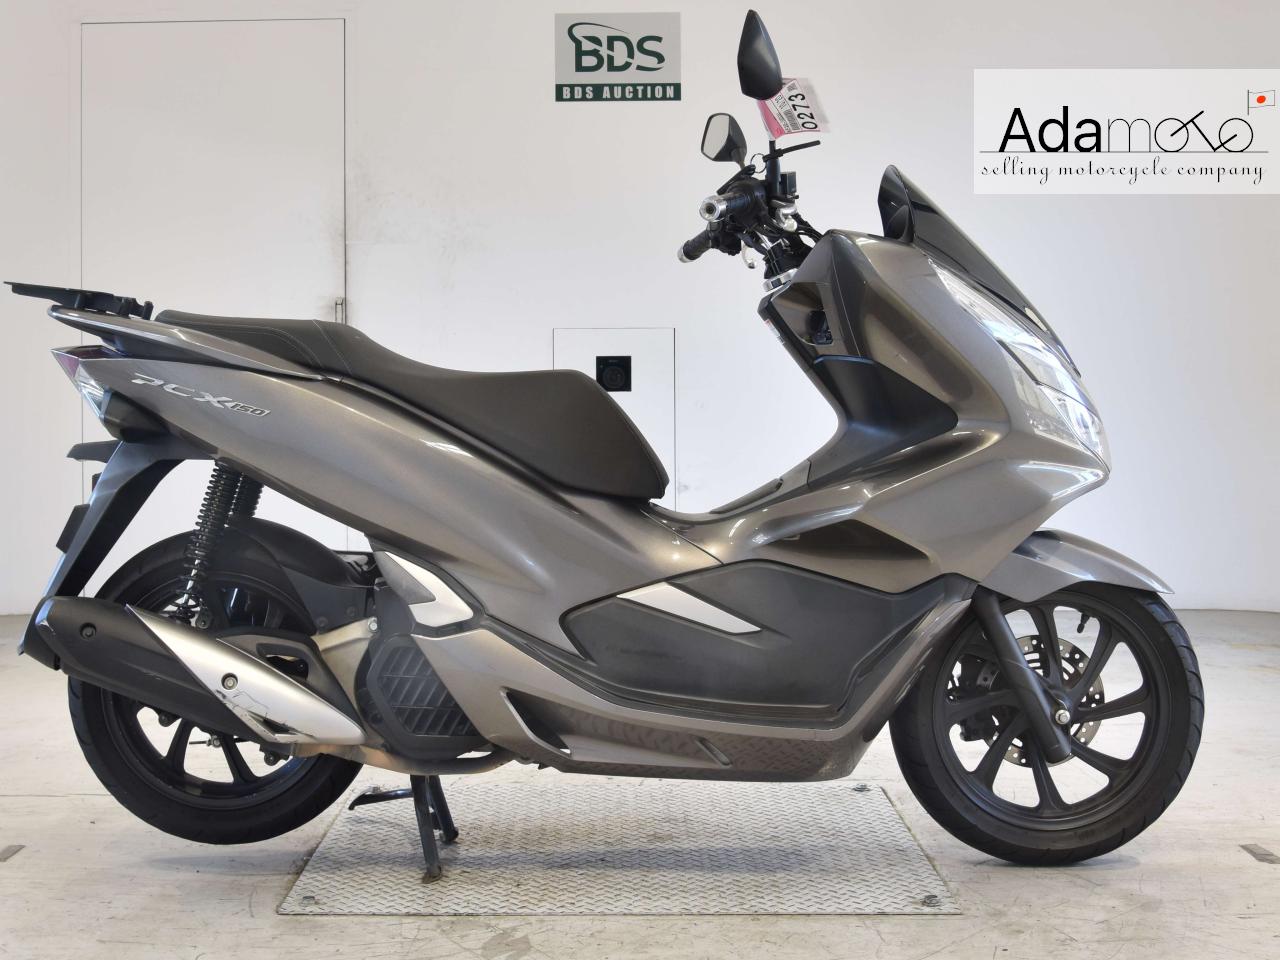 Honda PCX150 3 - Adamoto - Motorcycles from Japan